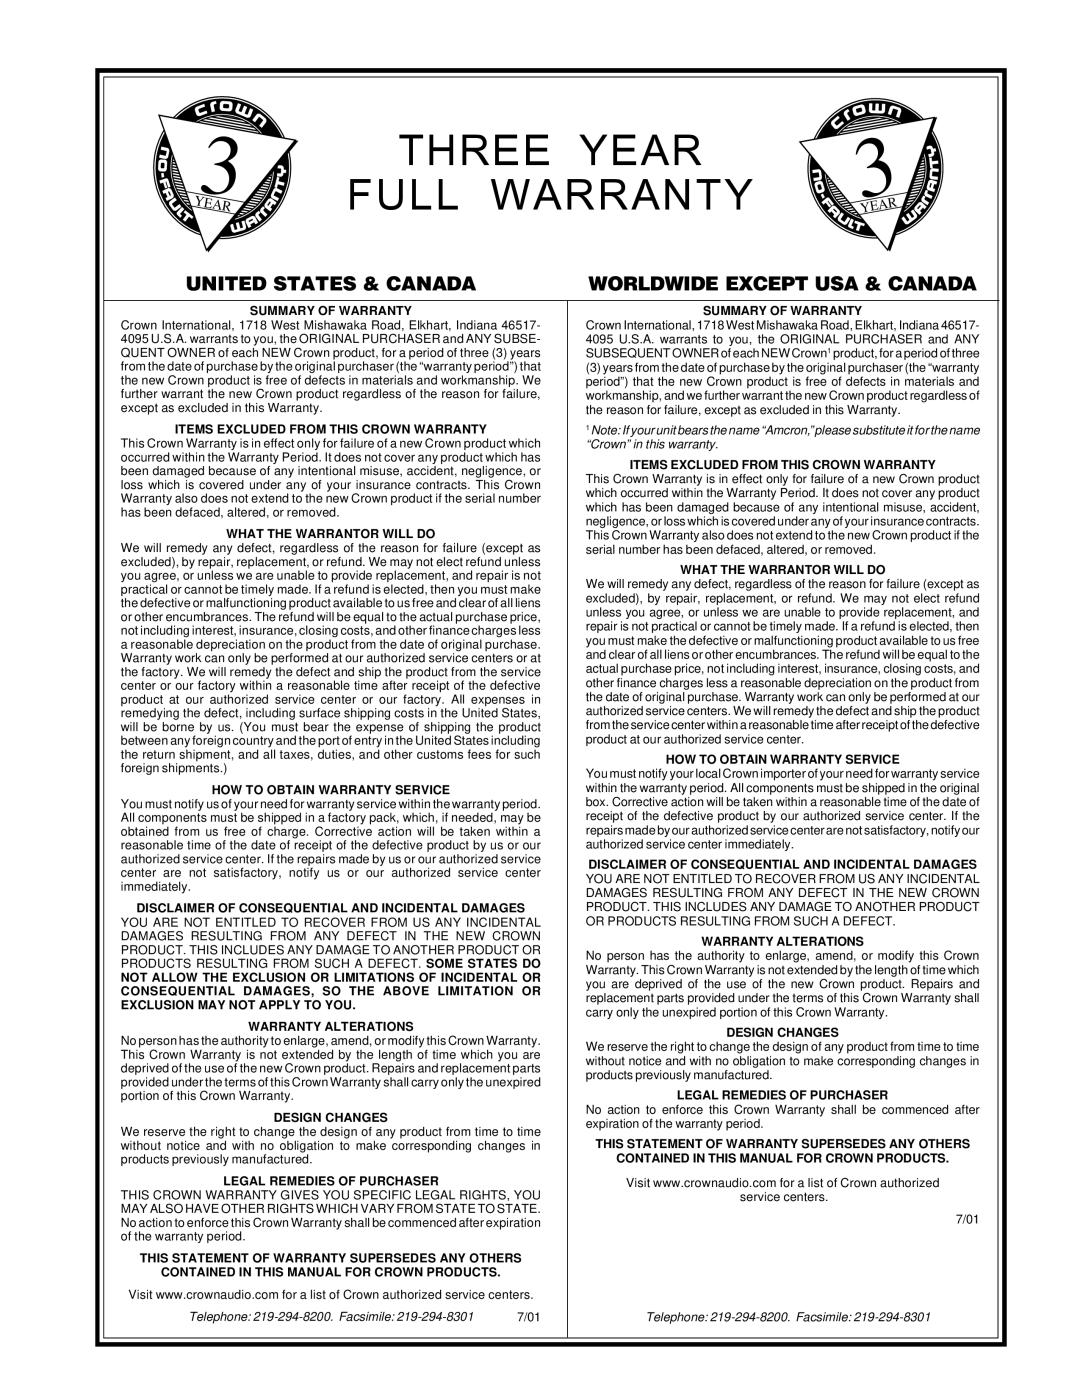 Crown Audio 2650 user manual Three Year Full Warranty, United States & Canada, Worldwide Except Usa & Canada, 7/01 